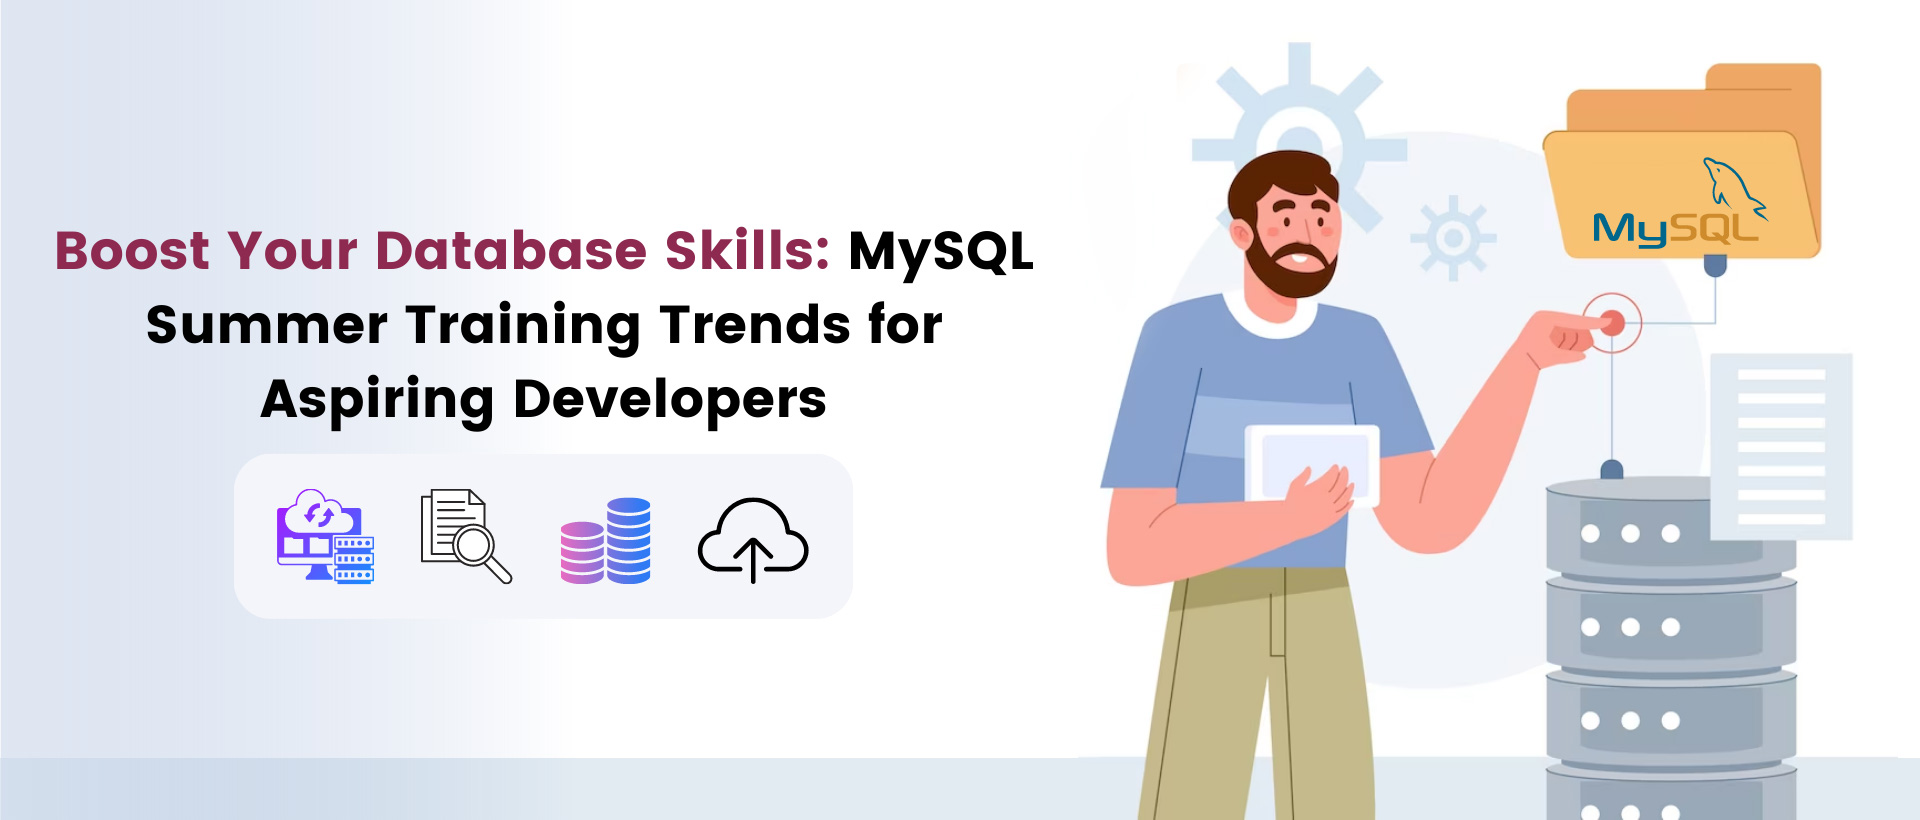 Boost Your Database Skills: MySQL Summer Training Trends for Aspiring Developers